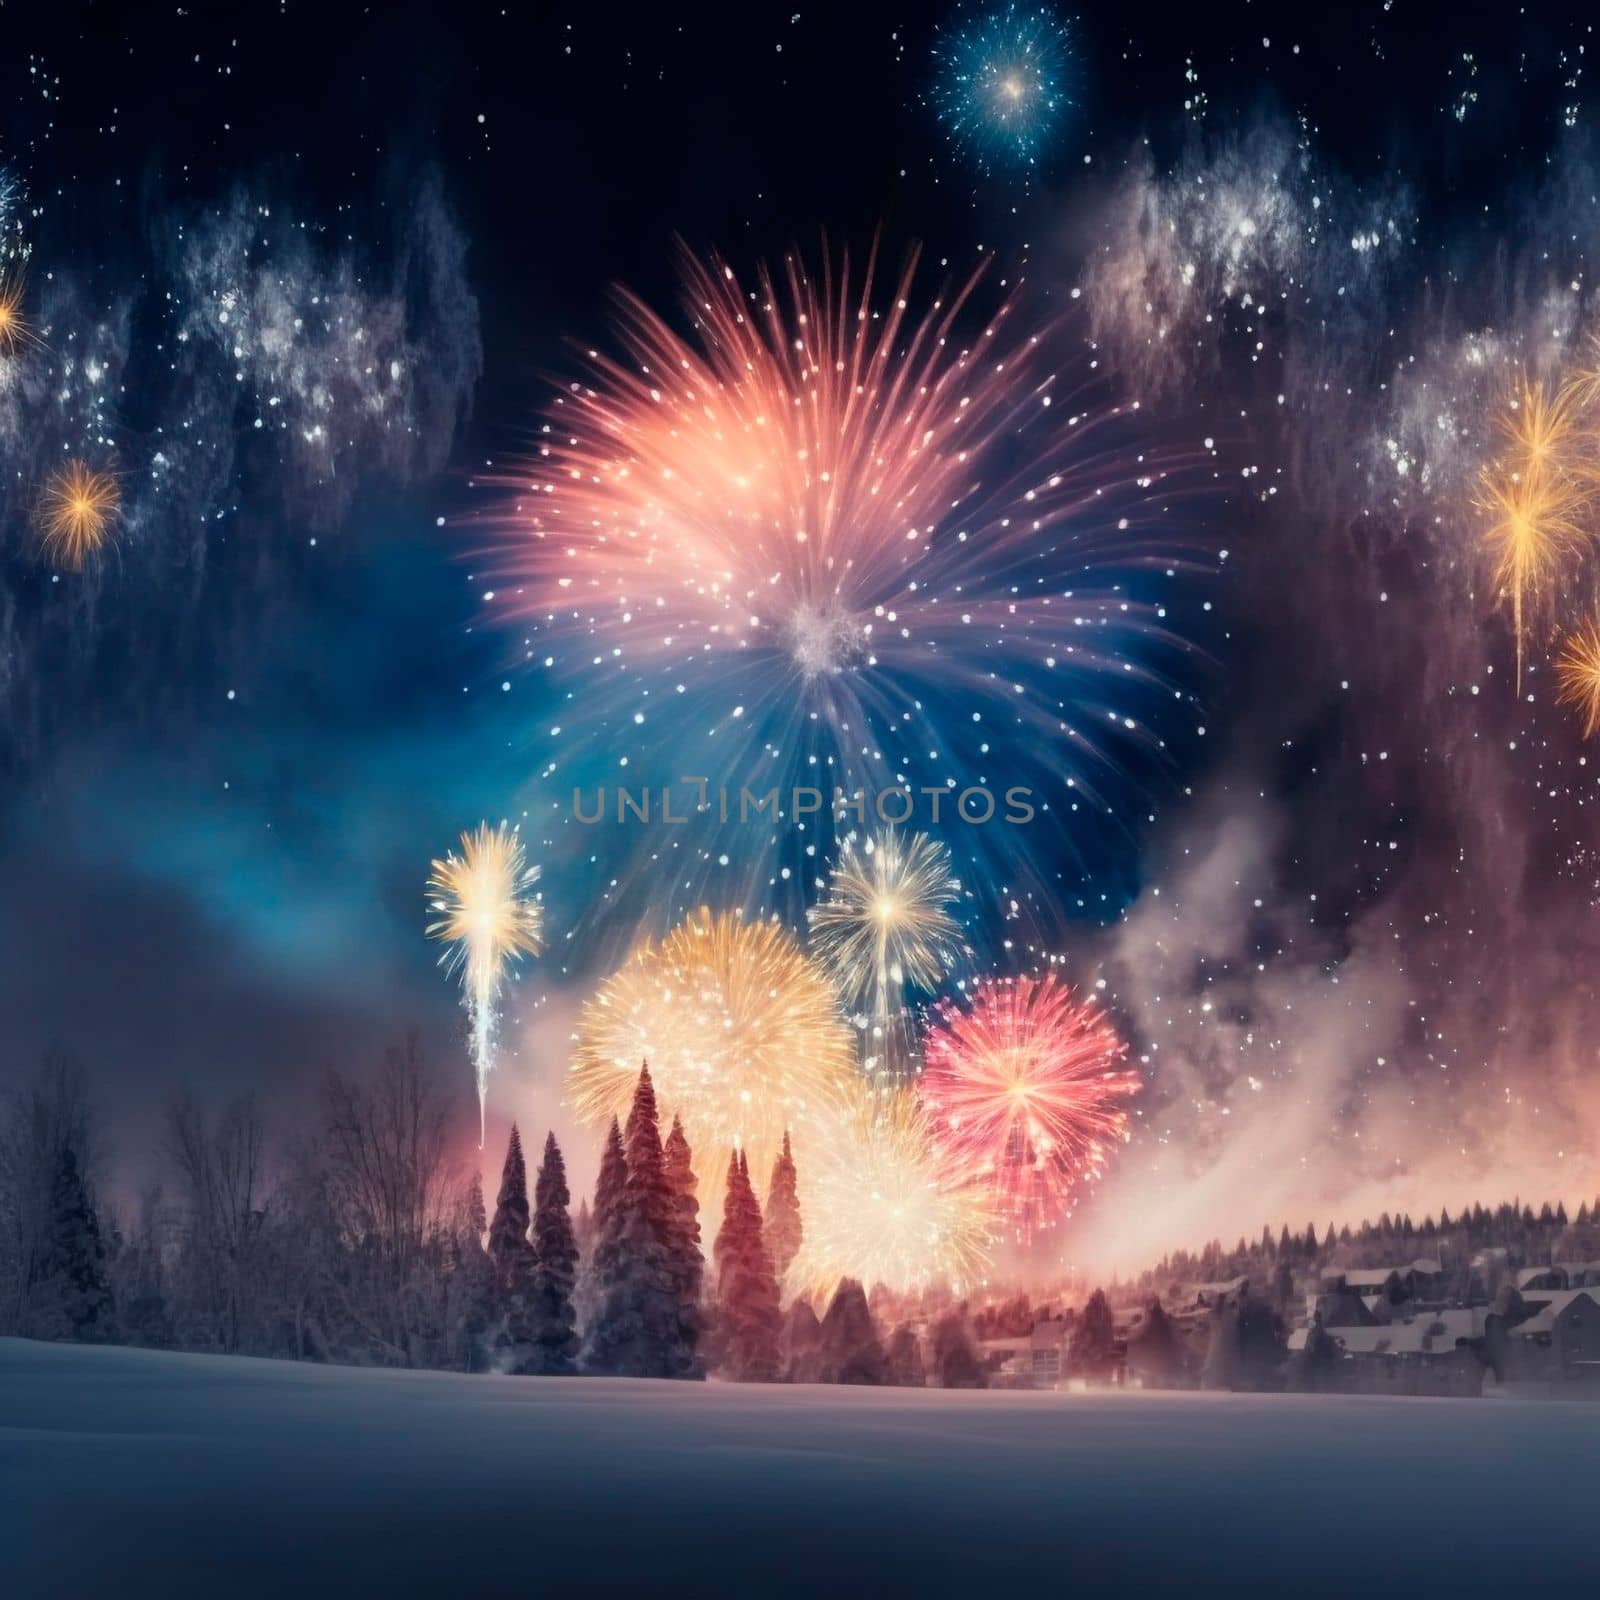 Bright night sky with fireworks by NeuroSky